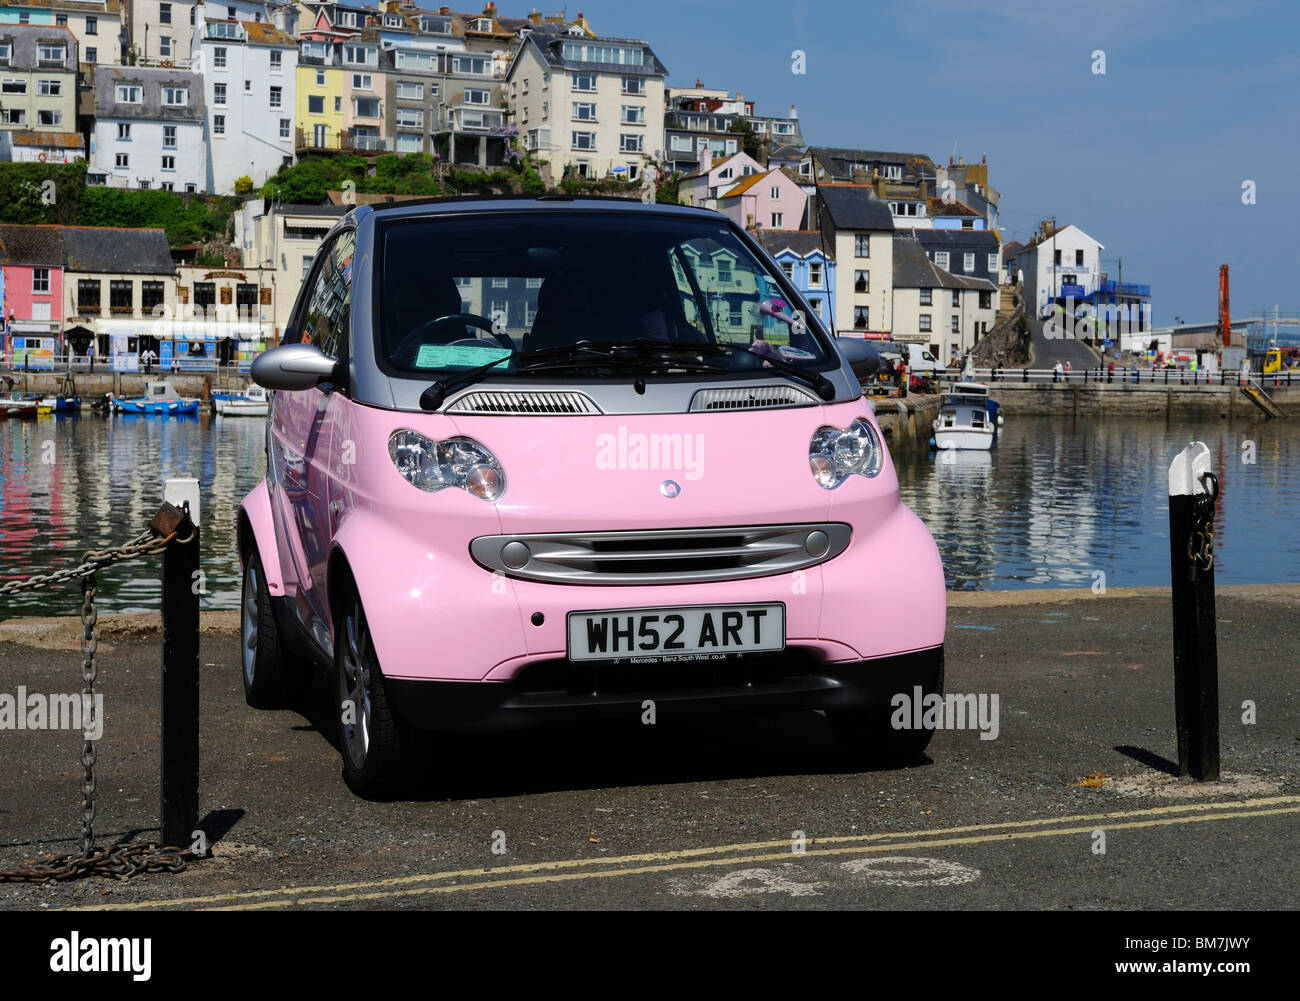 a pink smart car parked harbourside in brixham, devon, uk Stock Photo